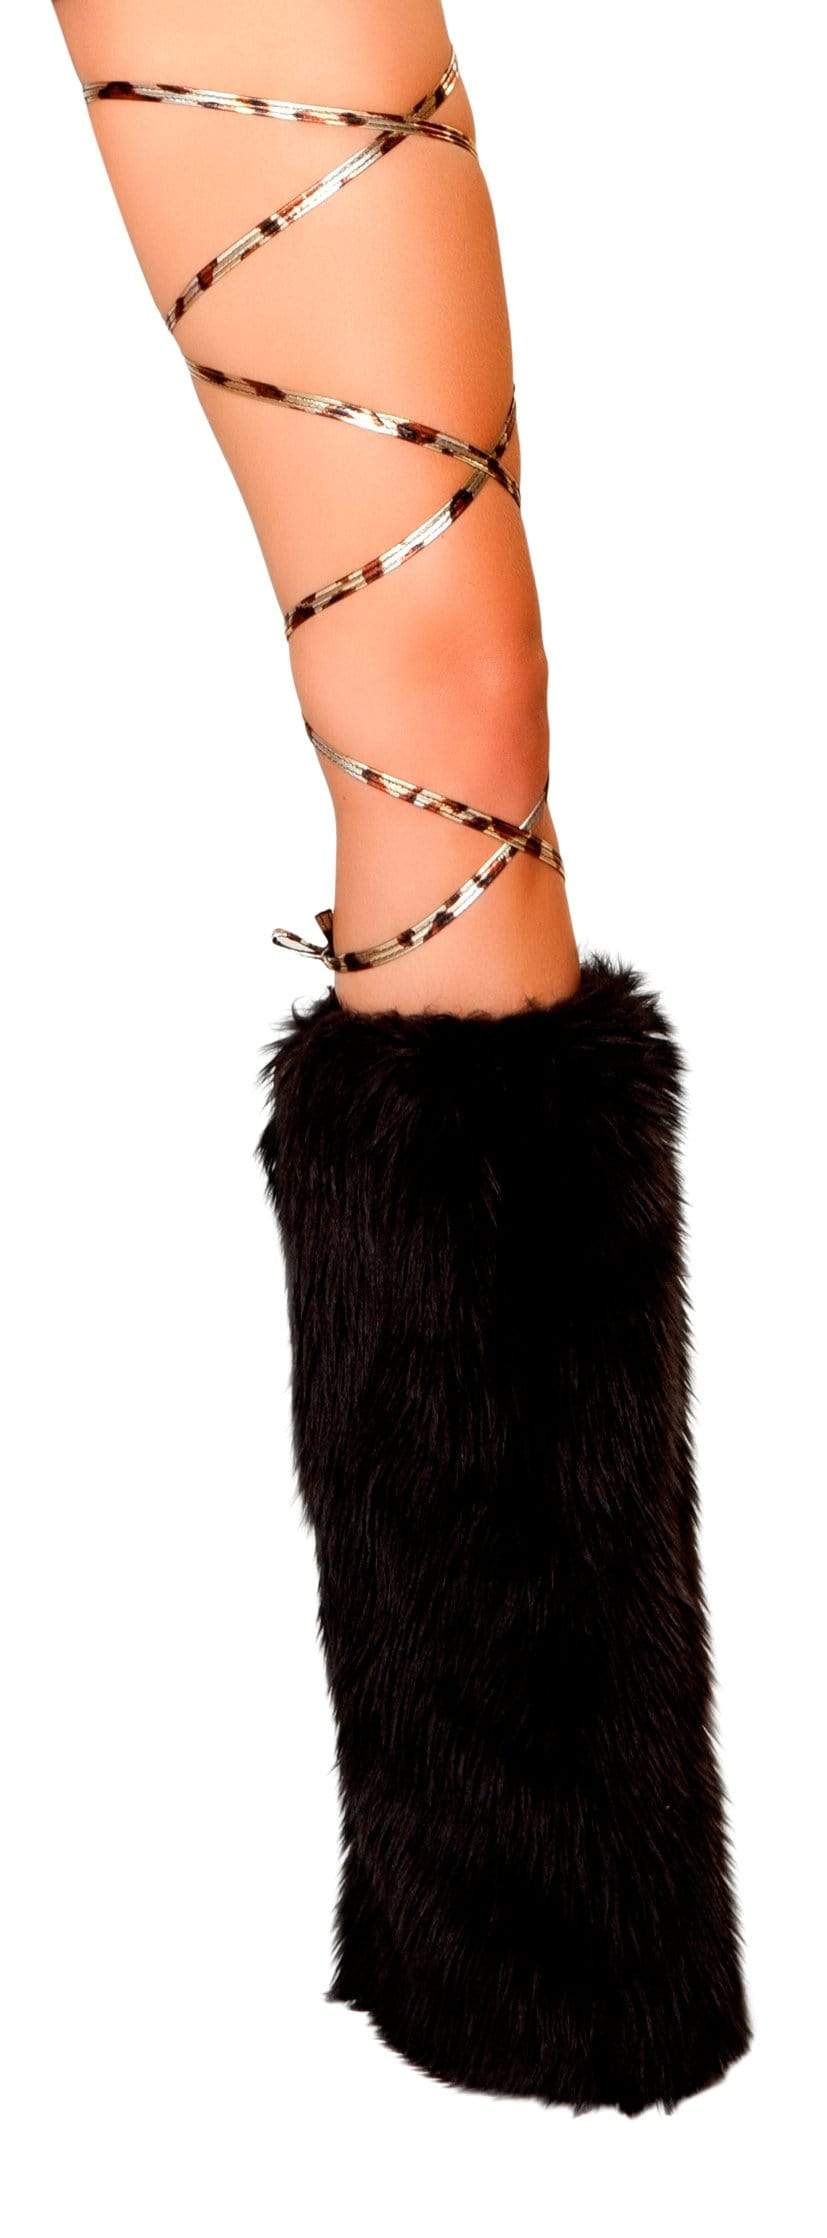 Roma ONE SIZE / PRINT Brown Leopard Print Metallic Thigh Leg Wraps EDM Dance Rave Wear SHC-3020-BRWNLEOPARD-R Apparel & Accessories > Costumes & Accessories > Costumes